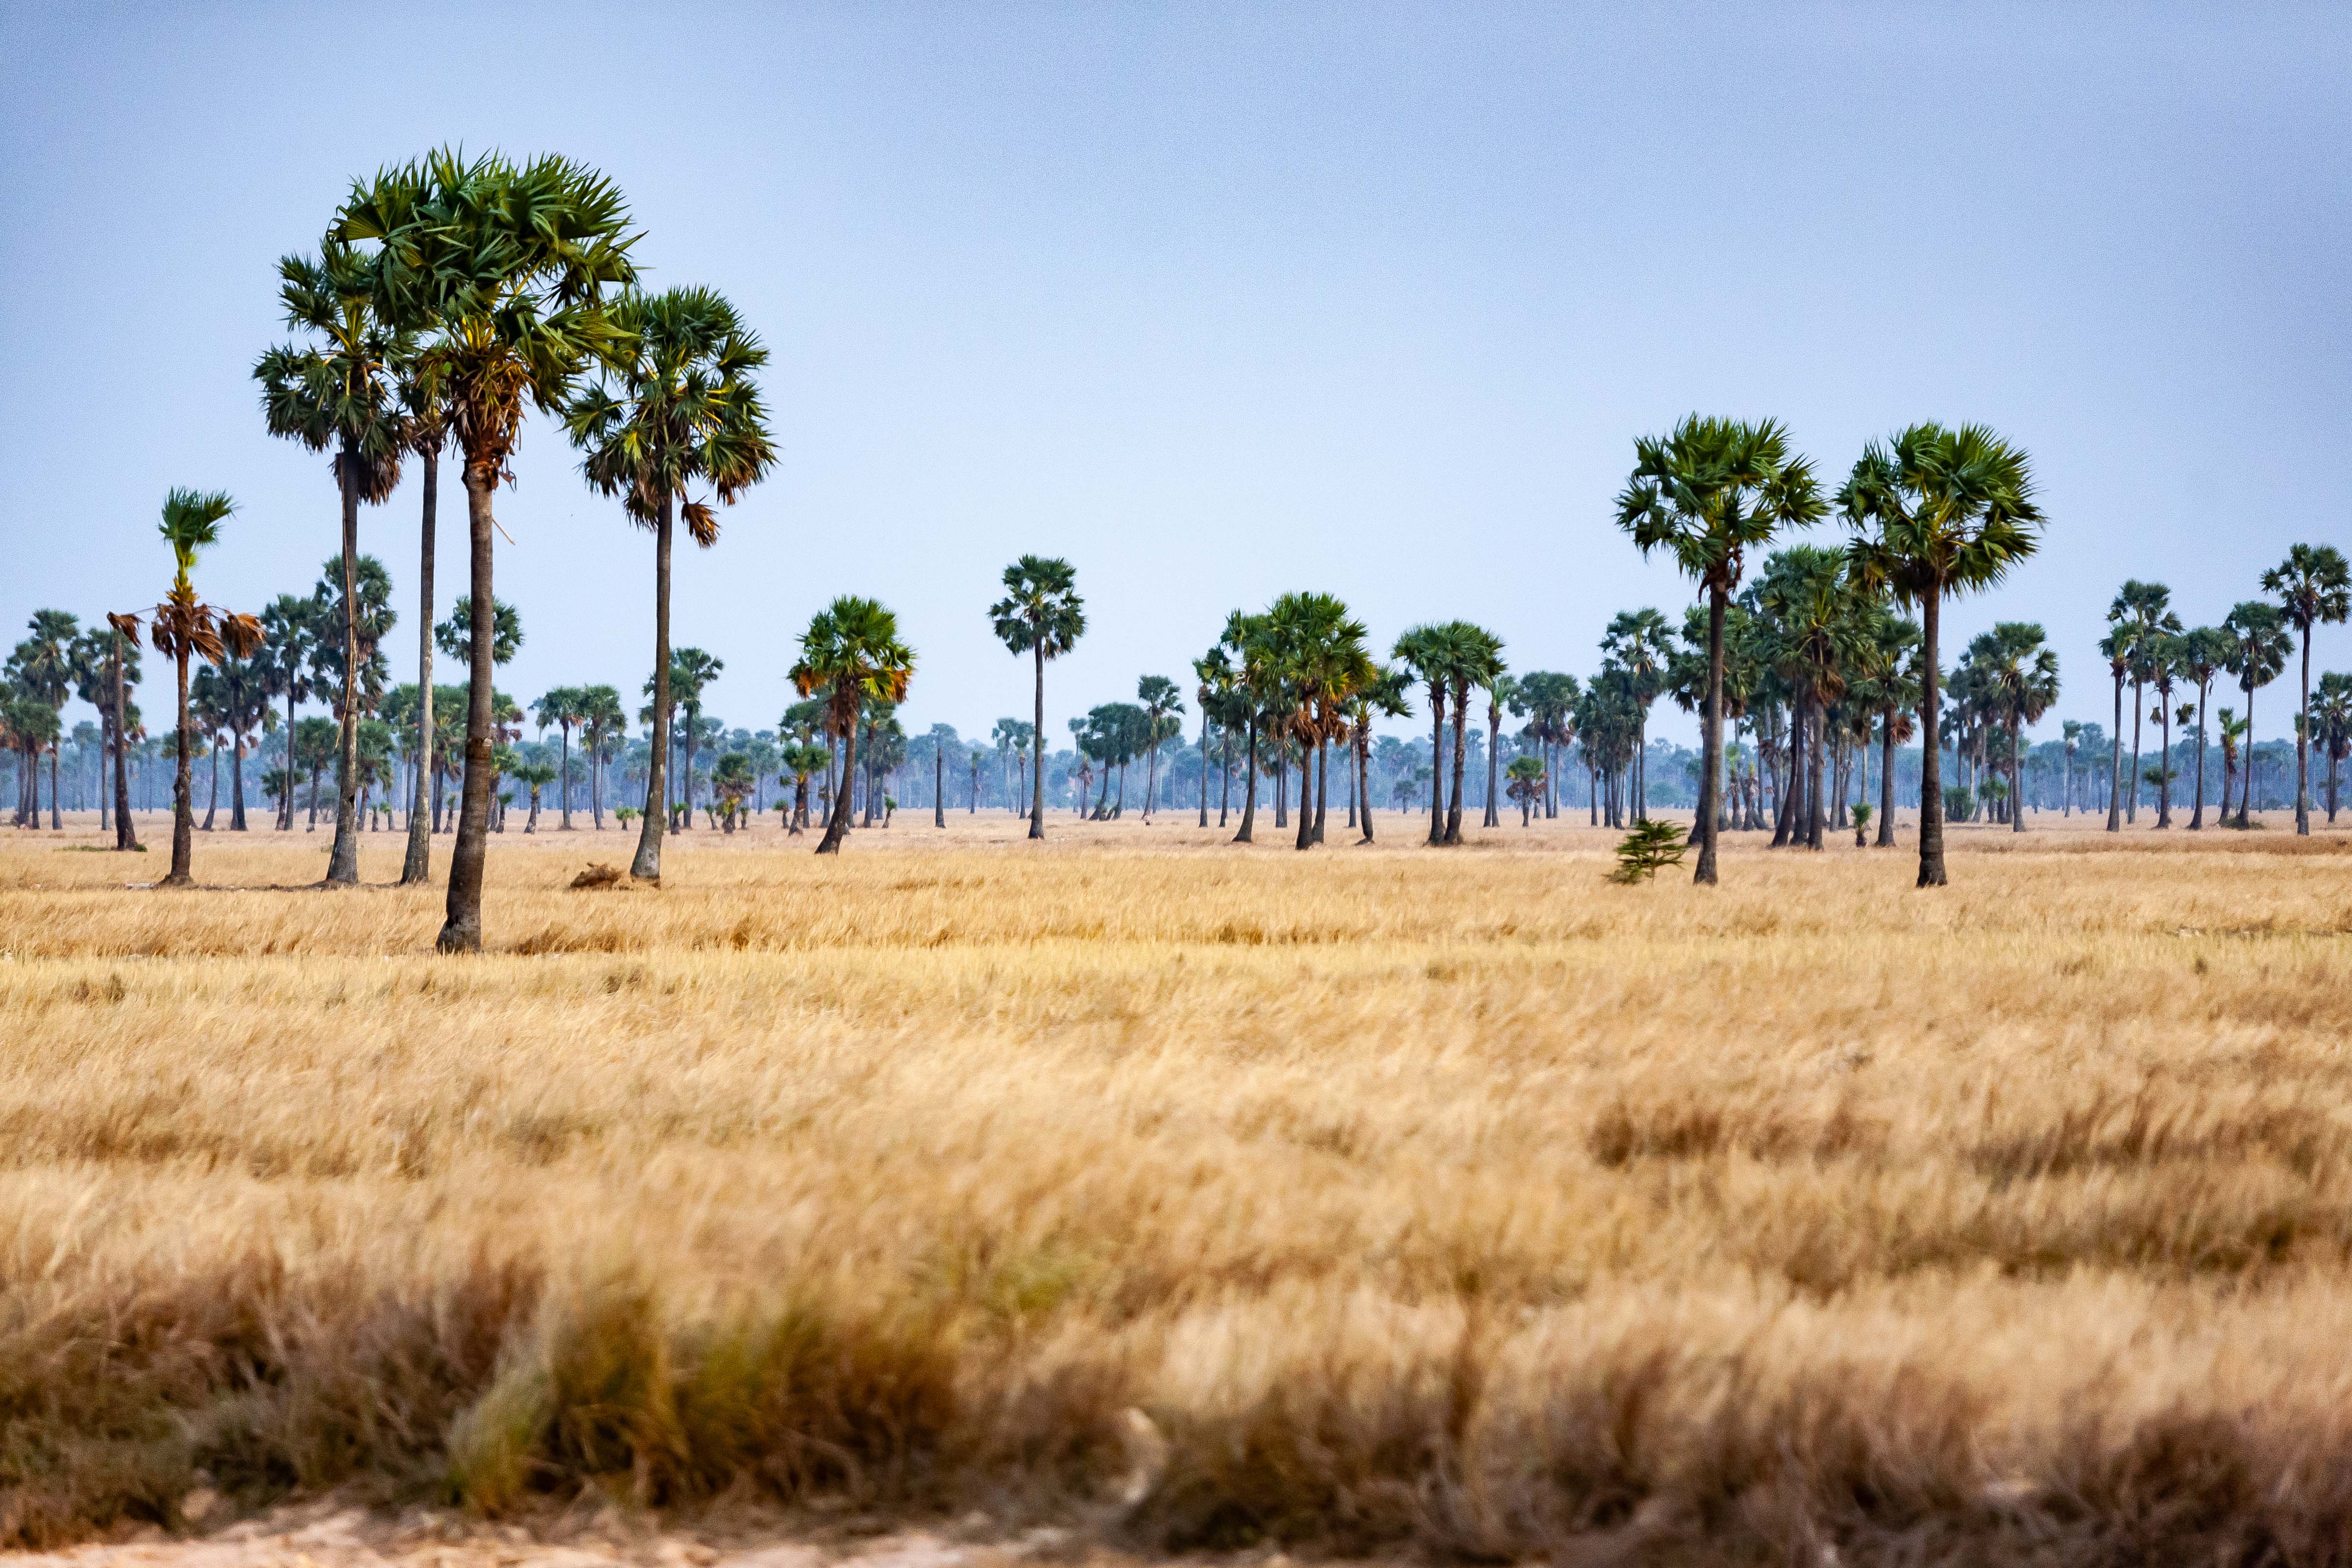 Cambodia, Prey Veaeng Prov, Field Of Palms, 2010, IMG 5311